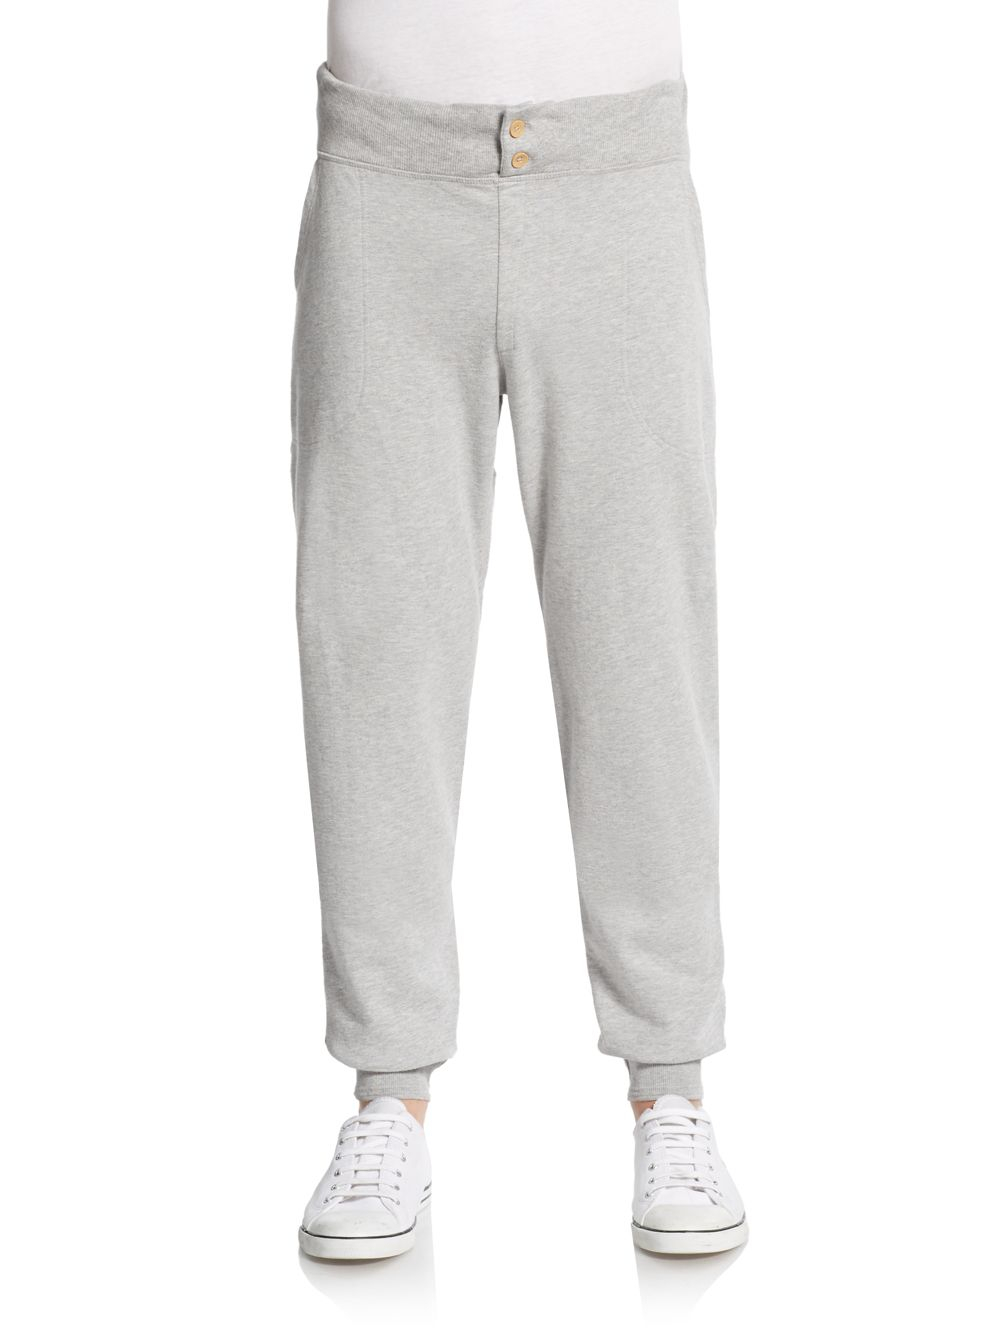 Lyst - Gant Lazy Cotton Sweatpants in Gray for Men